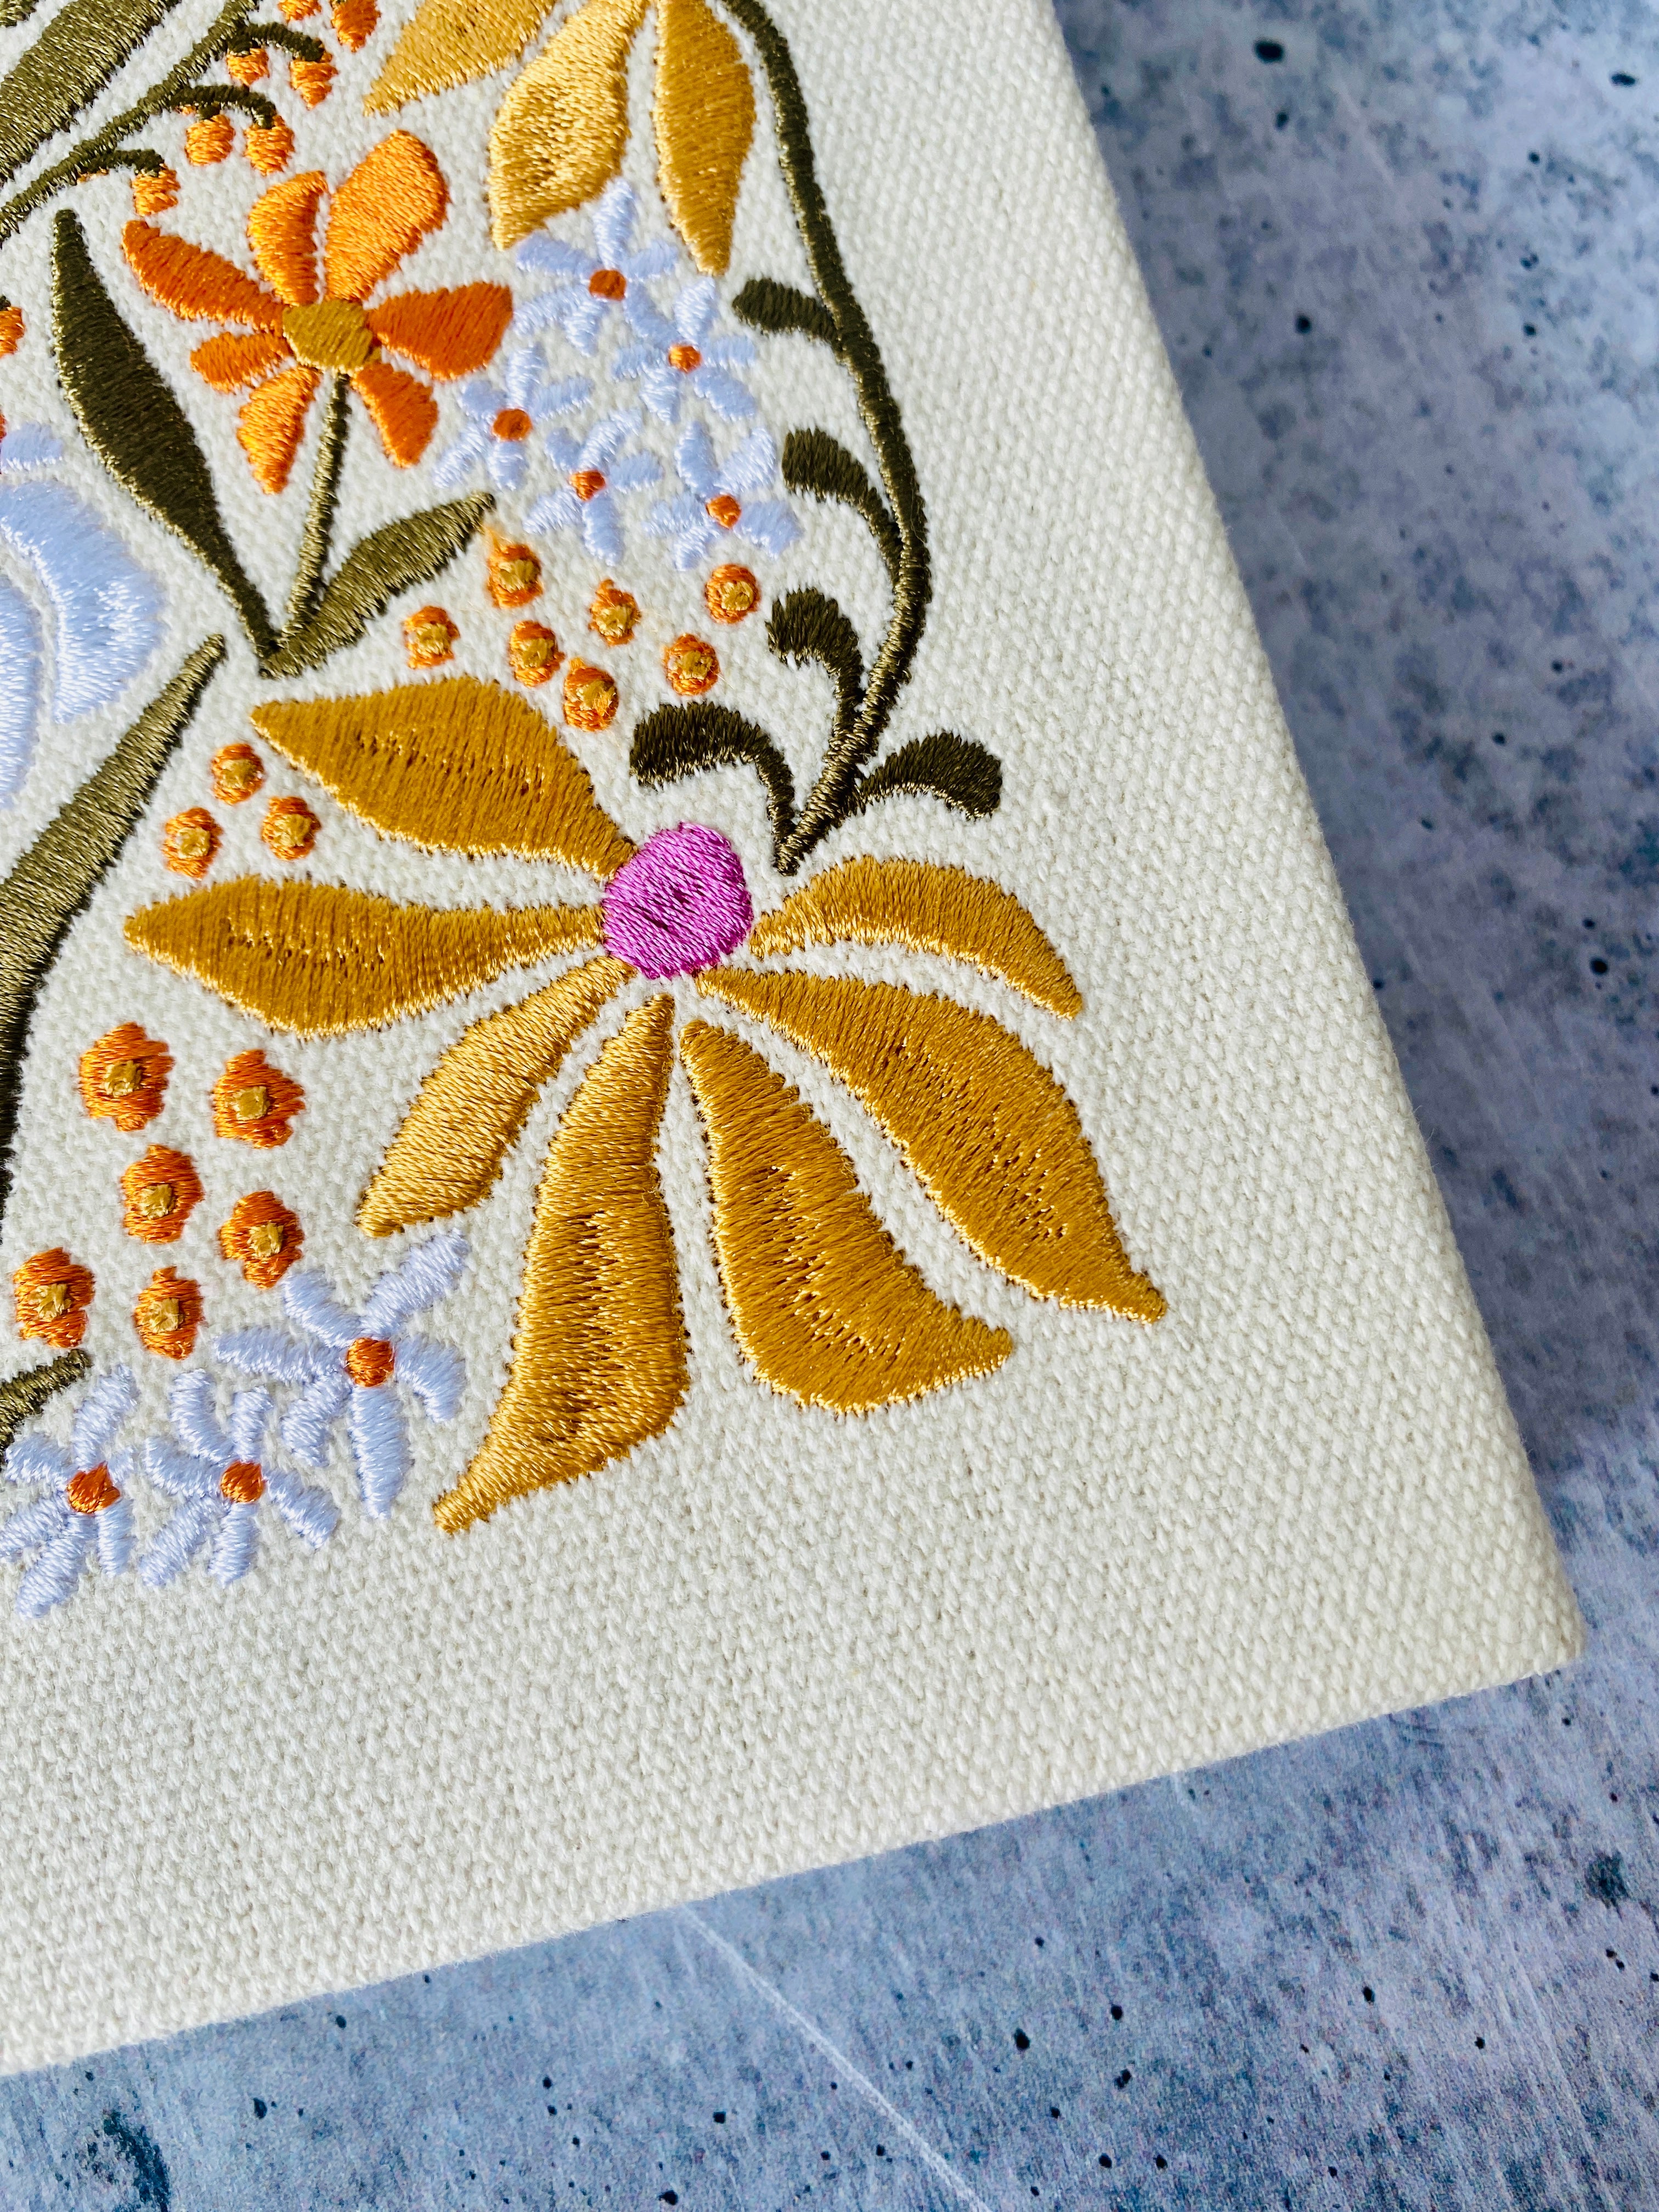 Flower Market Embroidered Journal